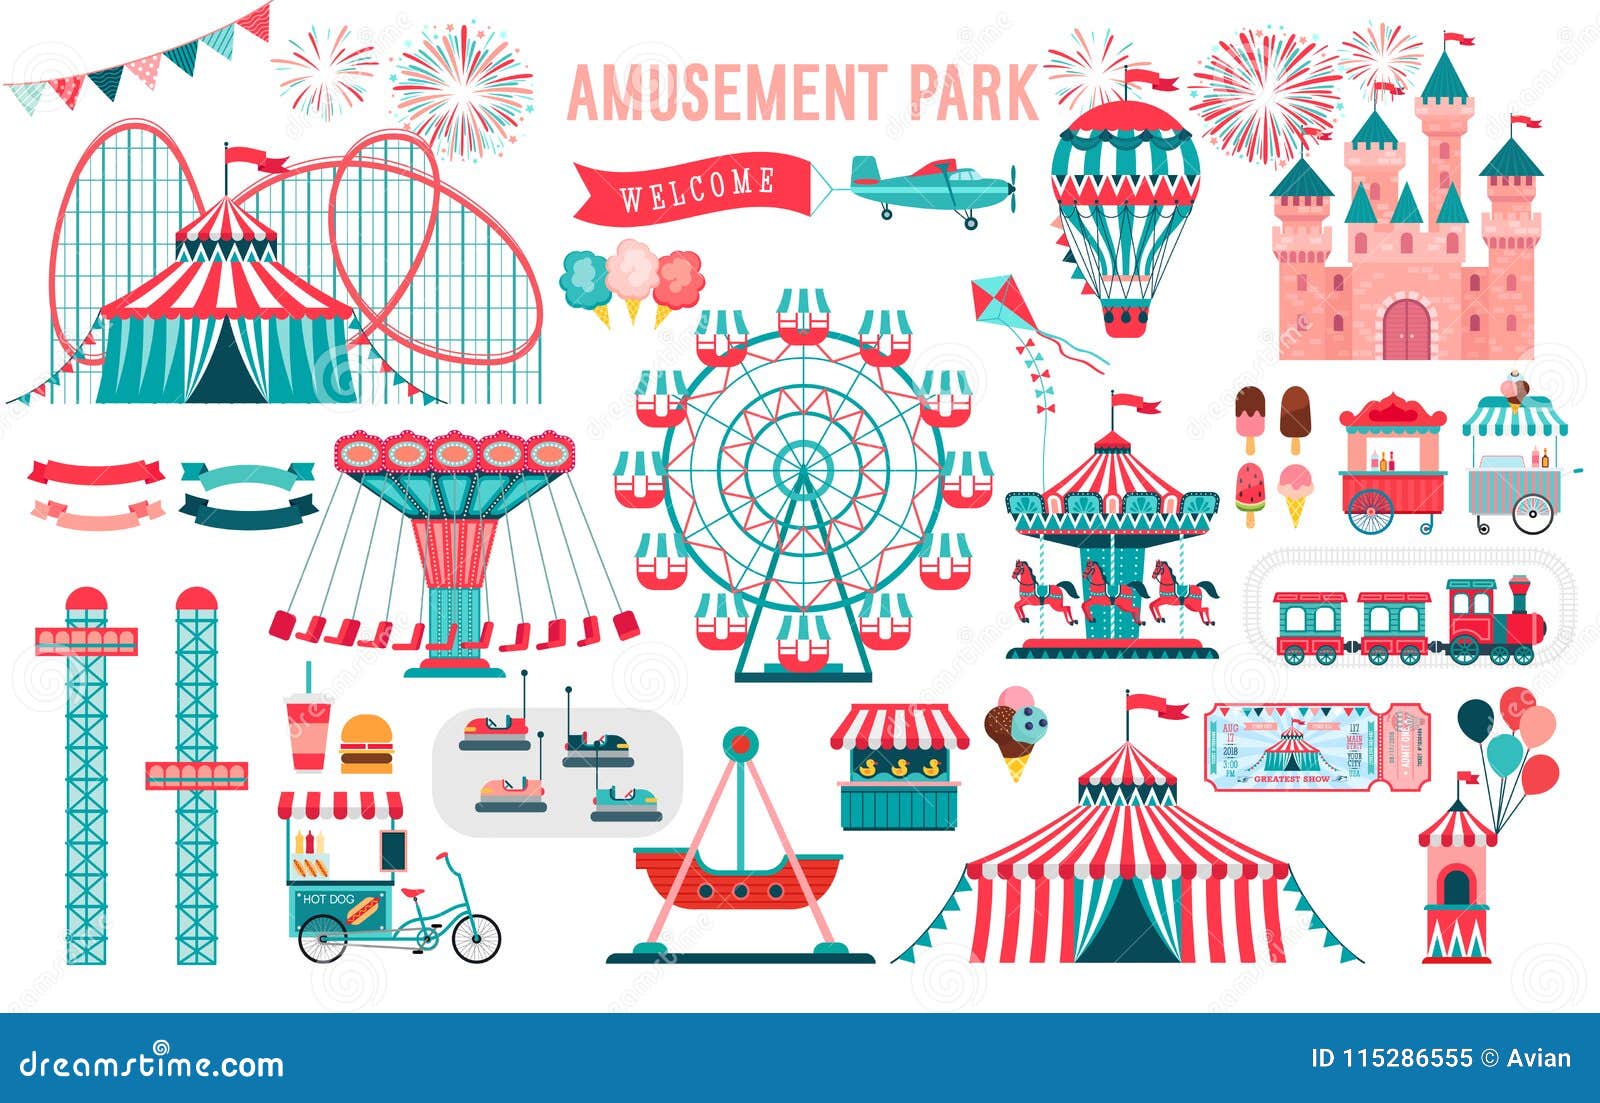 amusement park, circus and fun fair theme set, with roller coasters, carousels, castle, air balloon.